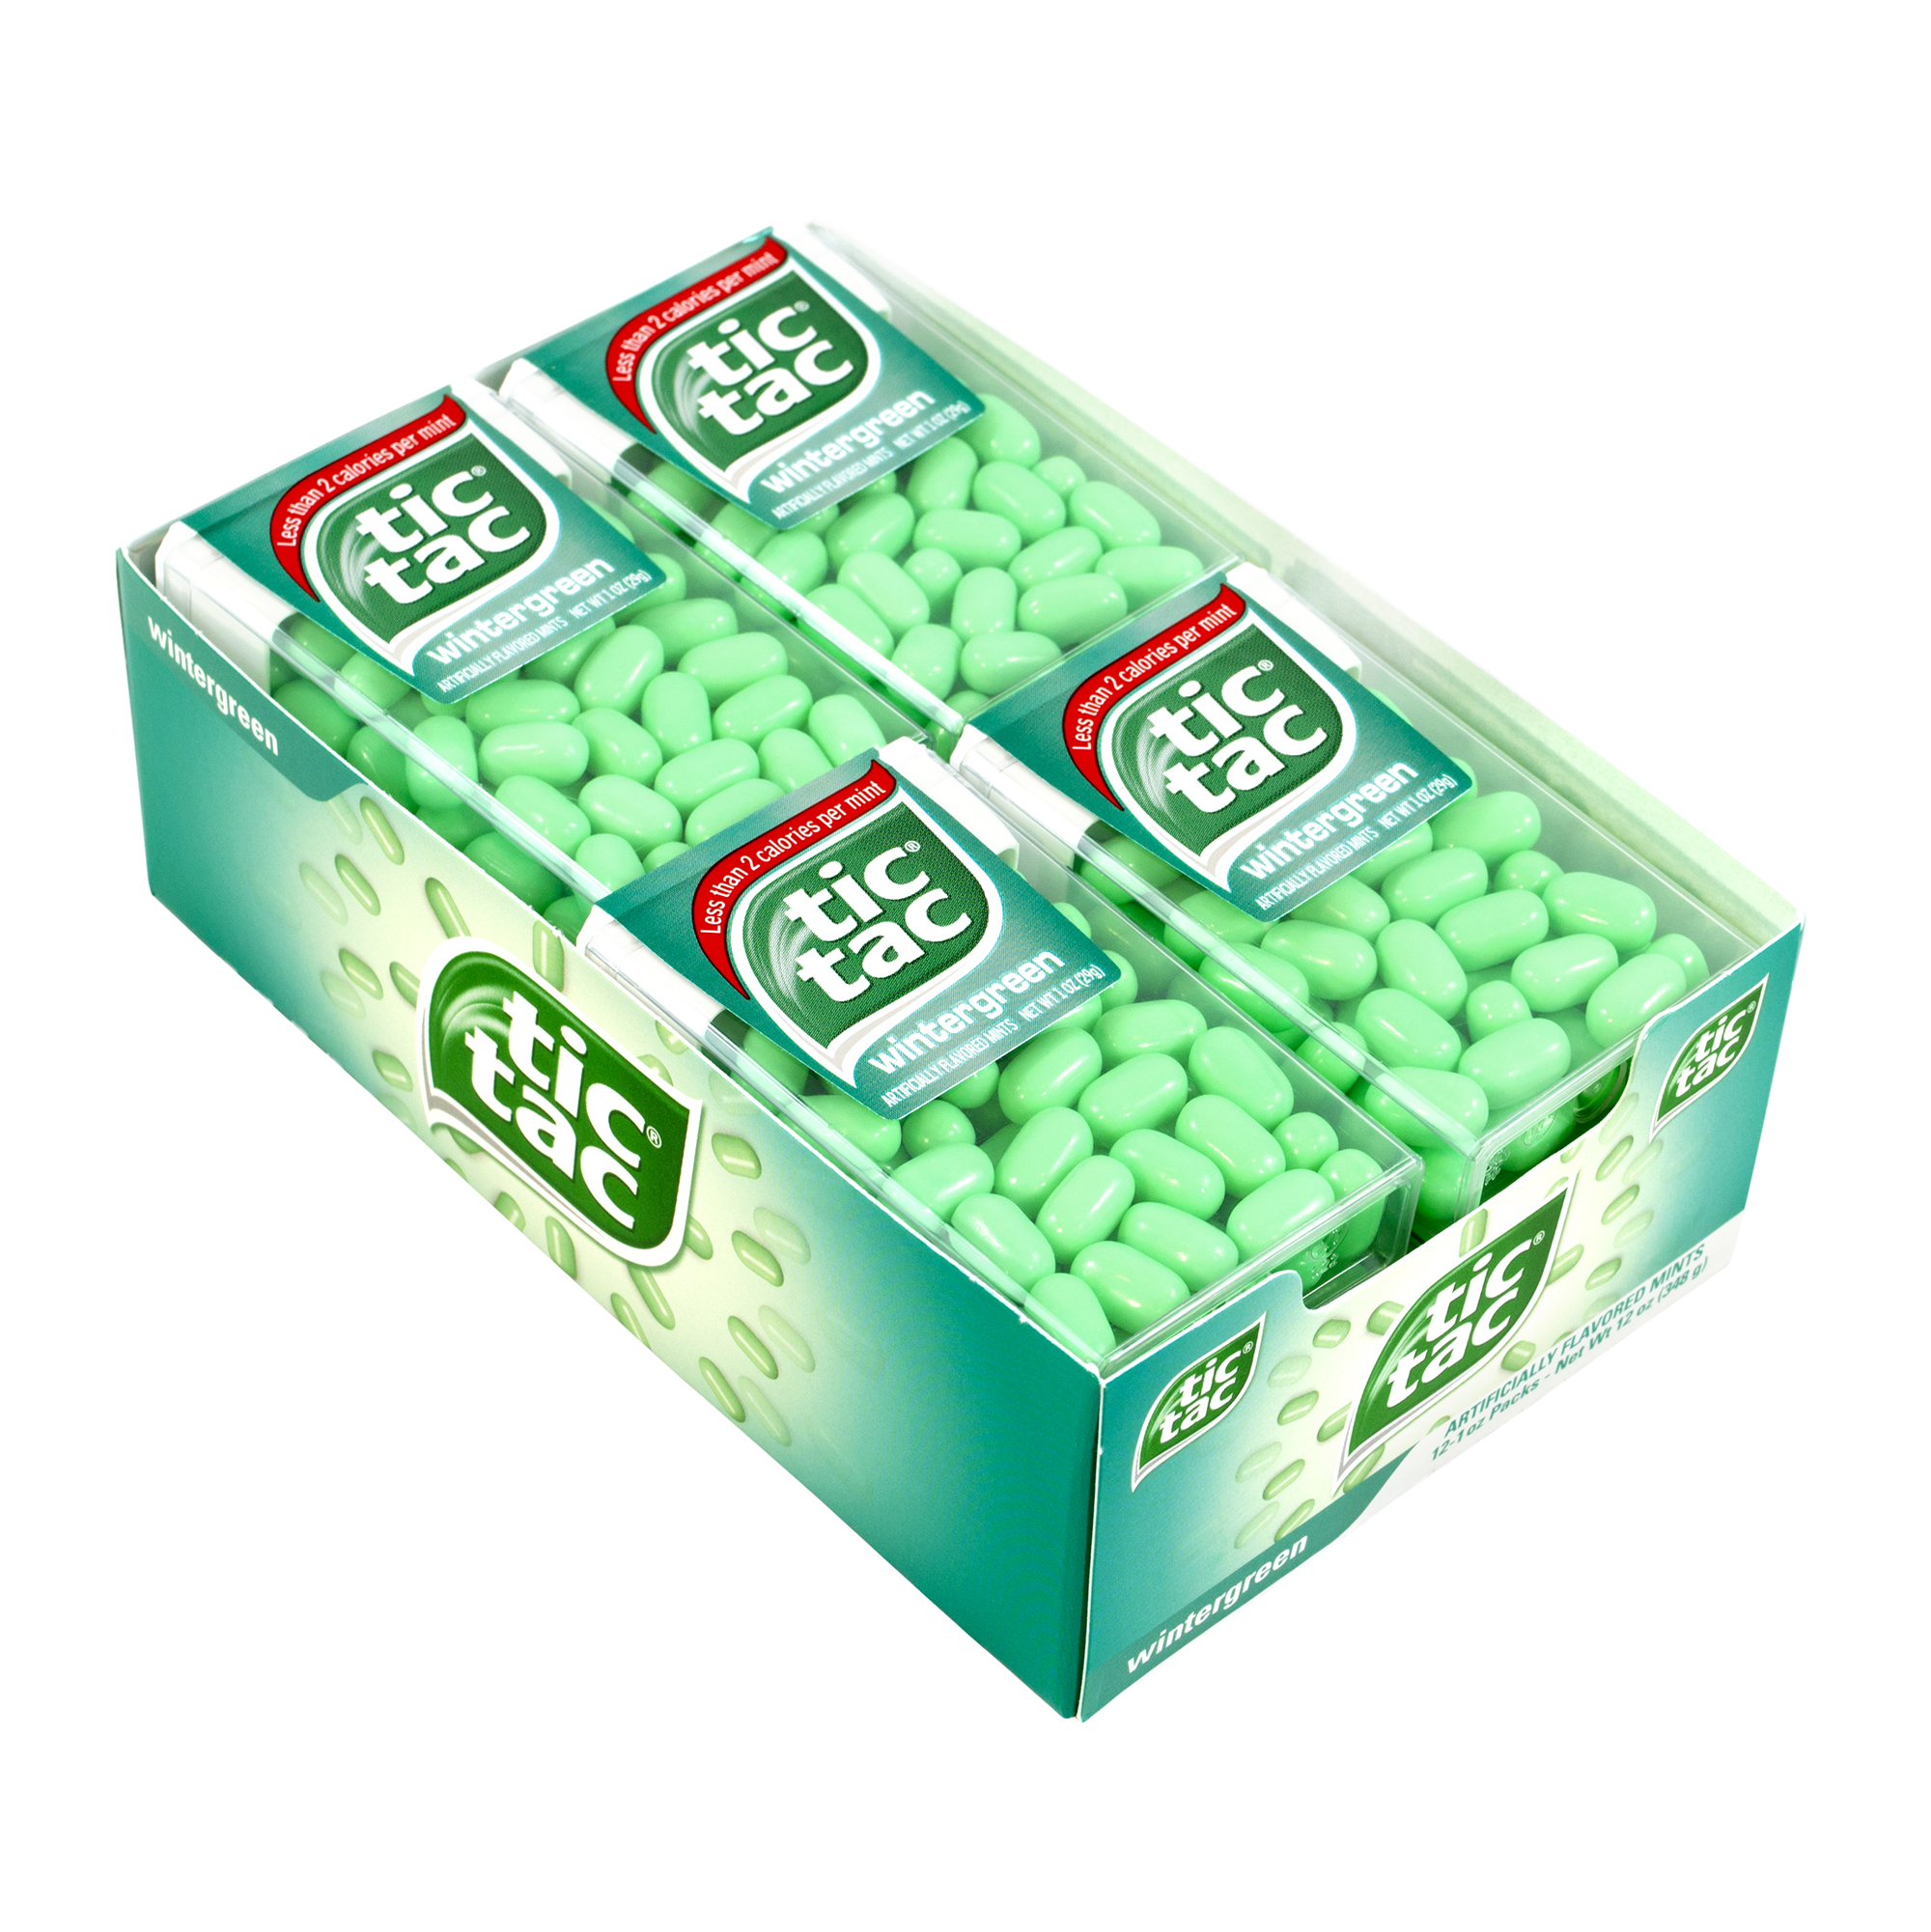 Tic Tacs Wintergreen Big Pack - 12 / Box - Candy Favorites